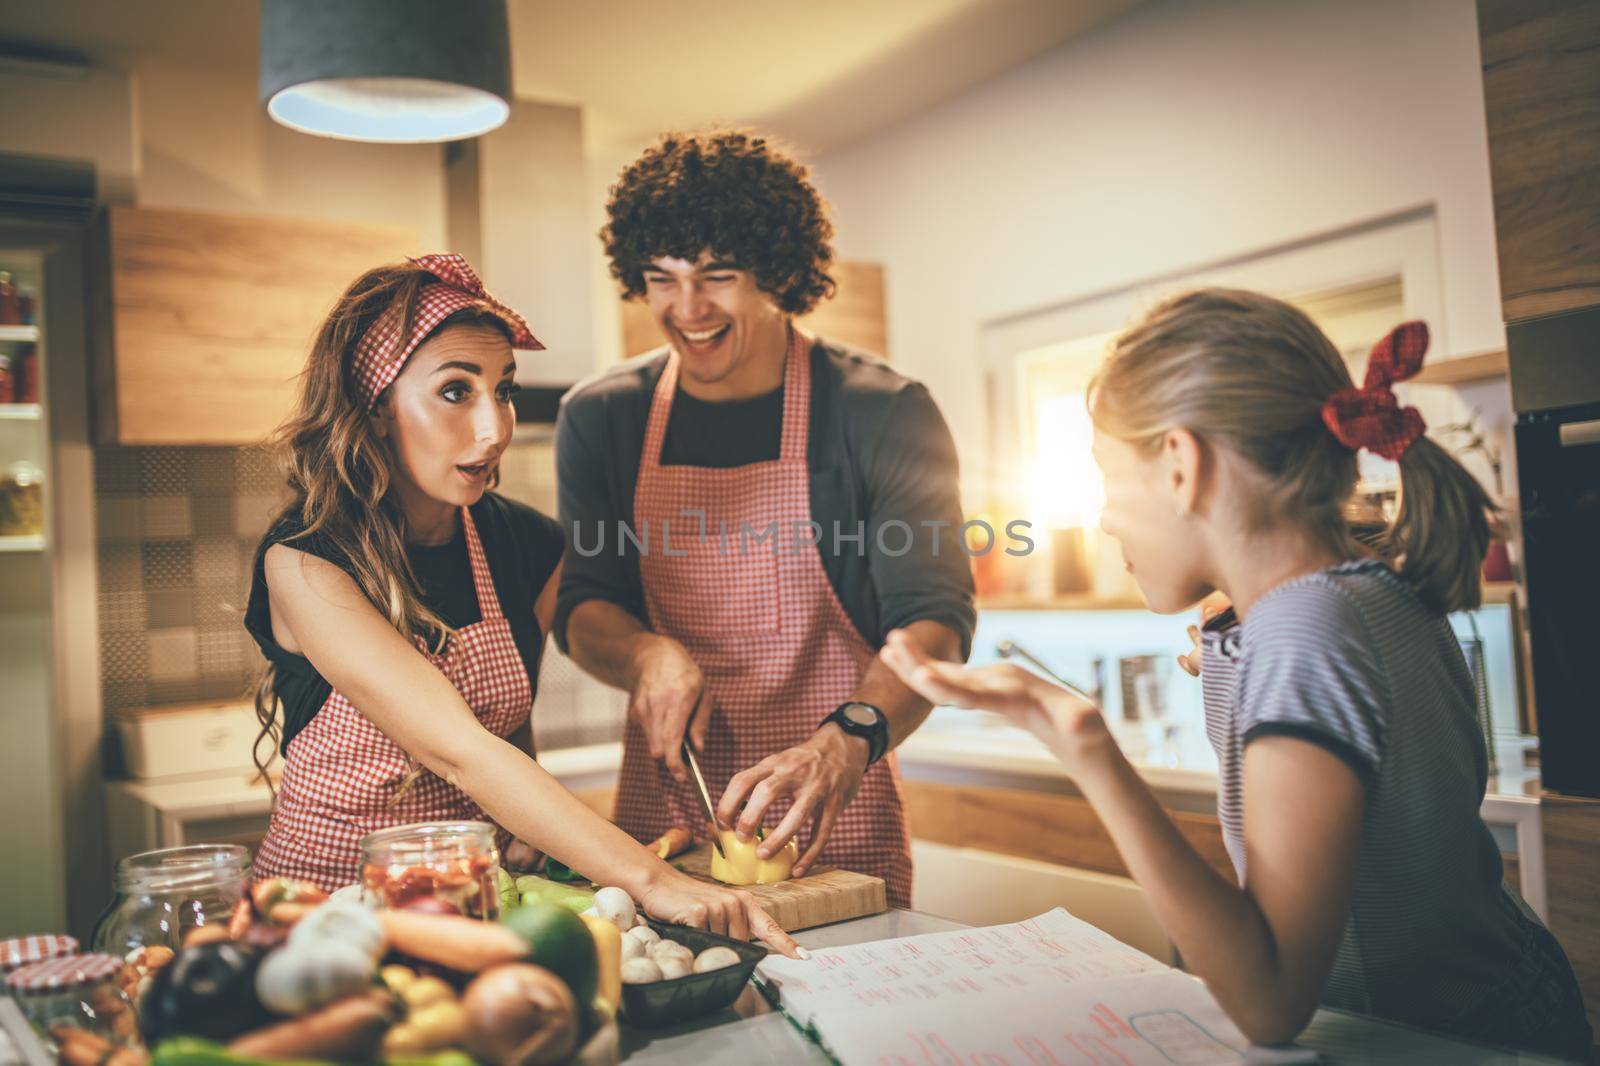 Teamwork In The Kitchen  by MilanMarkovic78